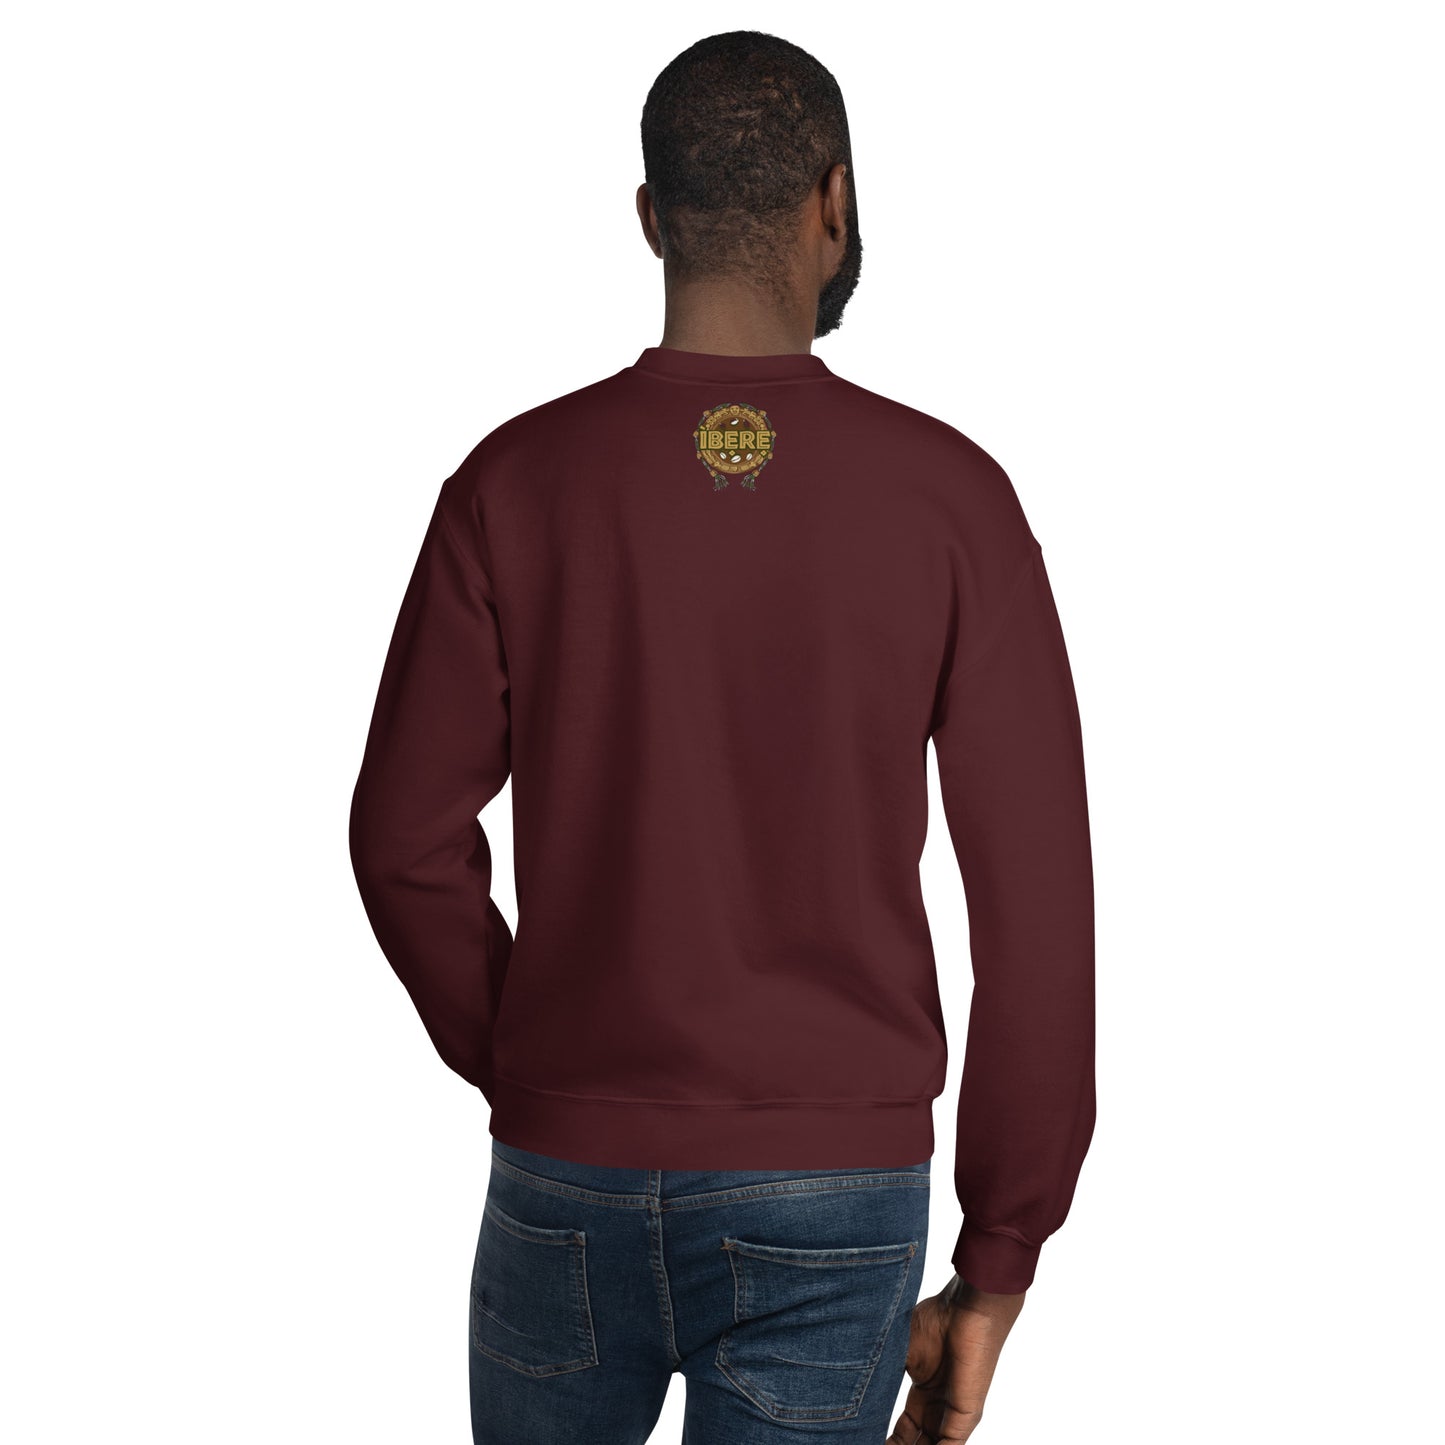 IFA Unisex Sweatshirt - Brown Small Logo